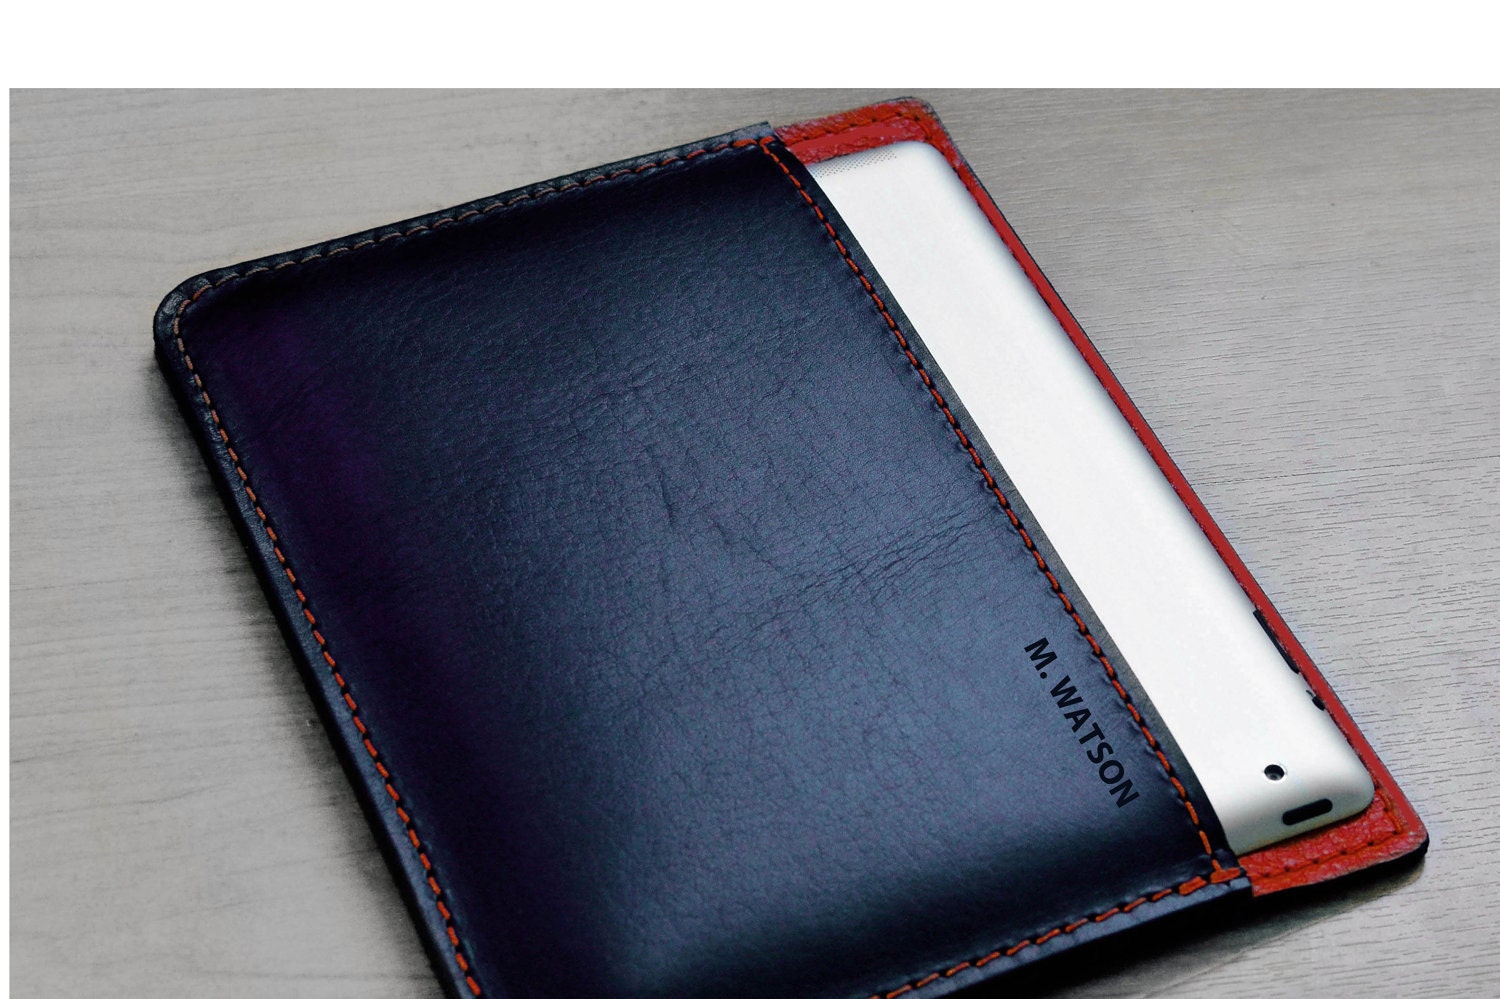 Gorgeous NAPA leather Red & Black Ipad 3, Ipad 4 sleeve. Half case.